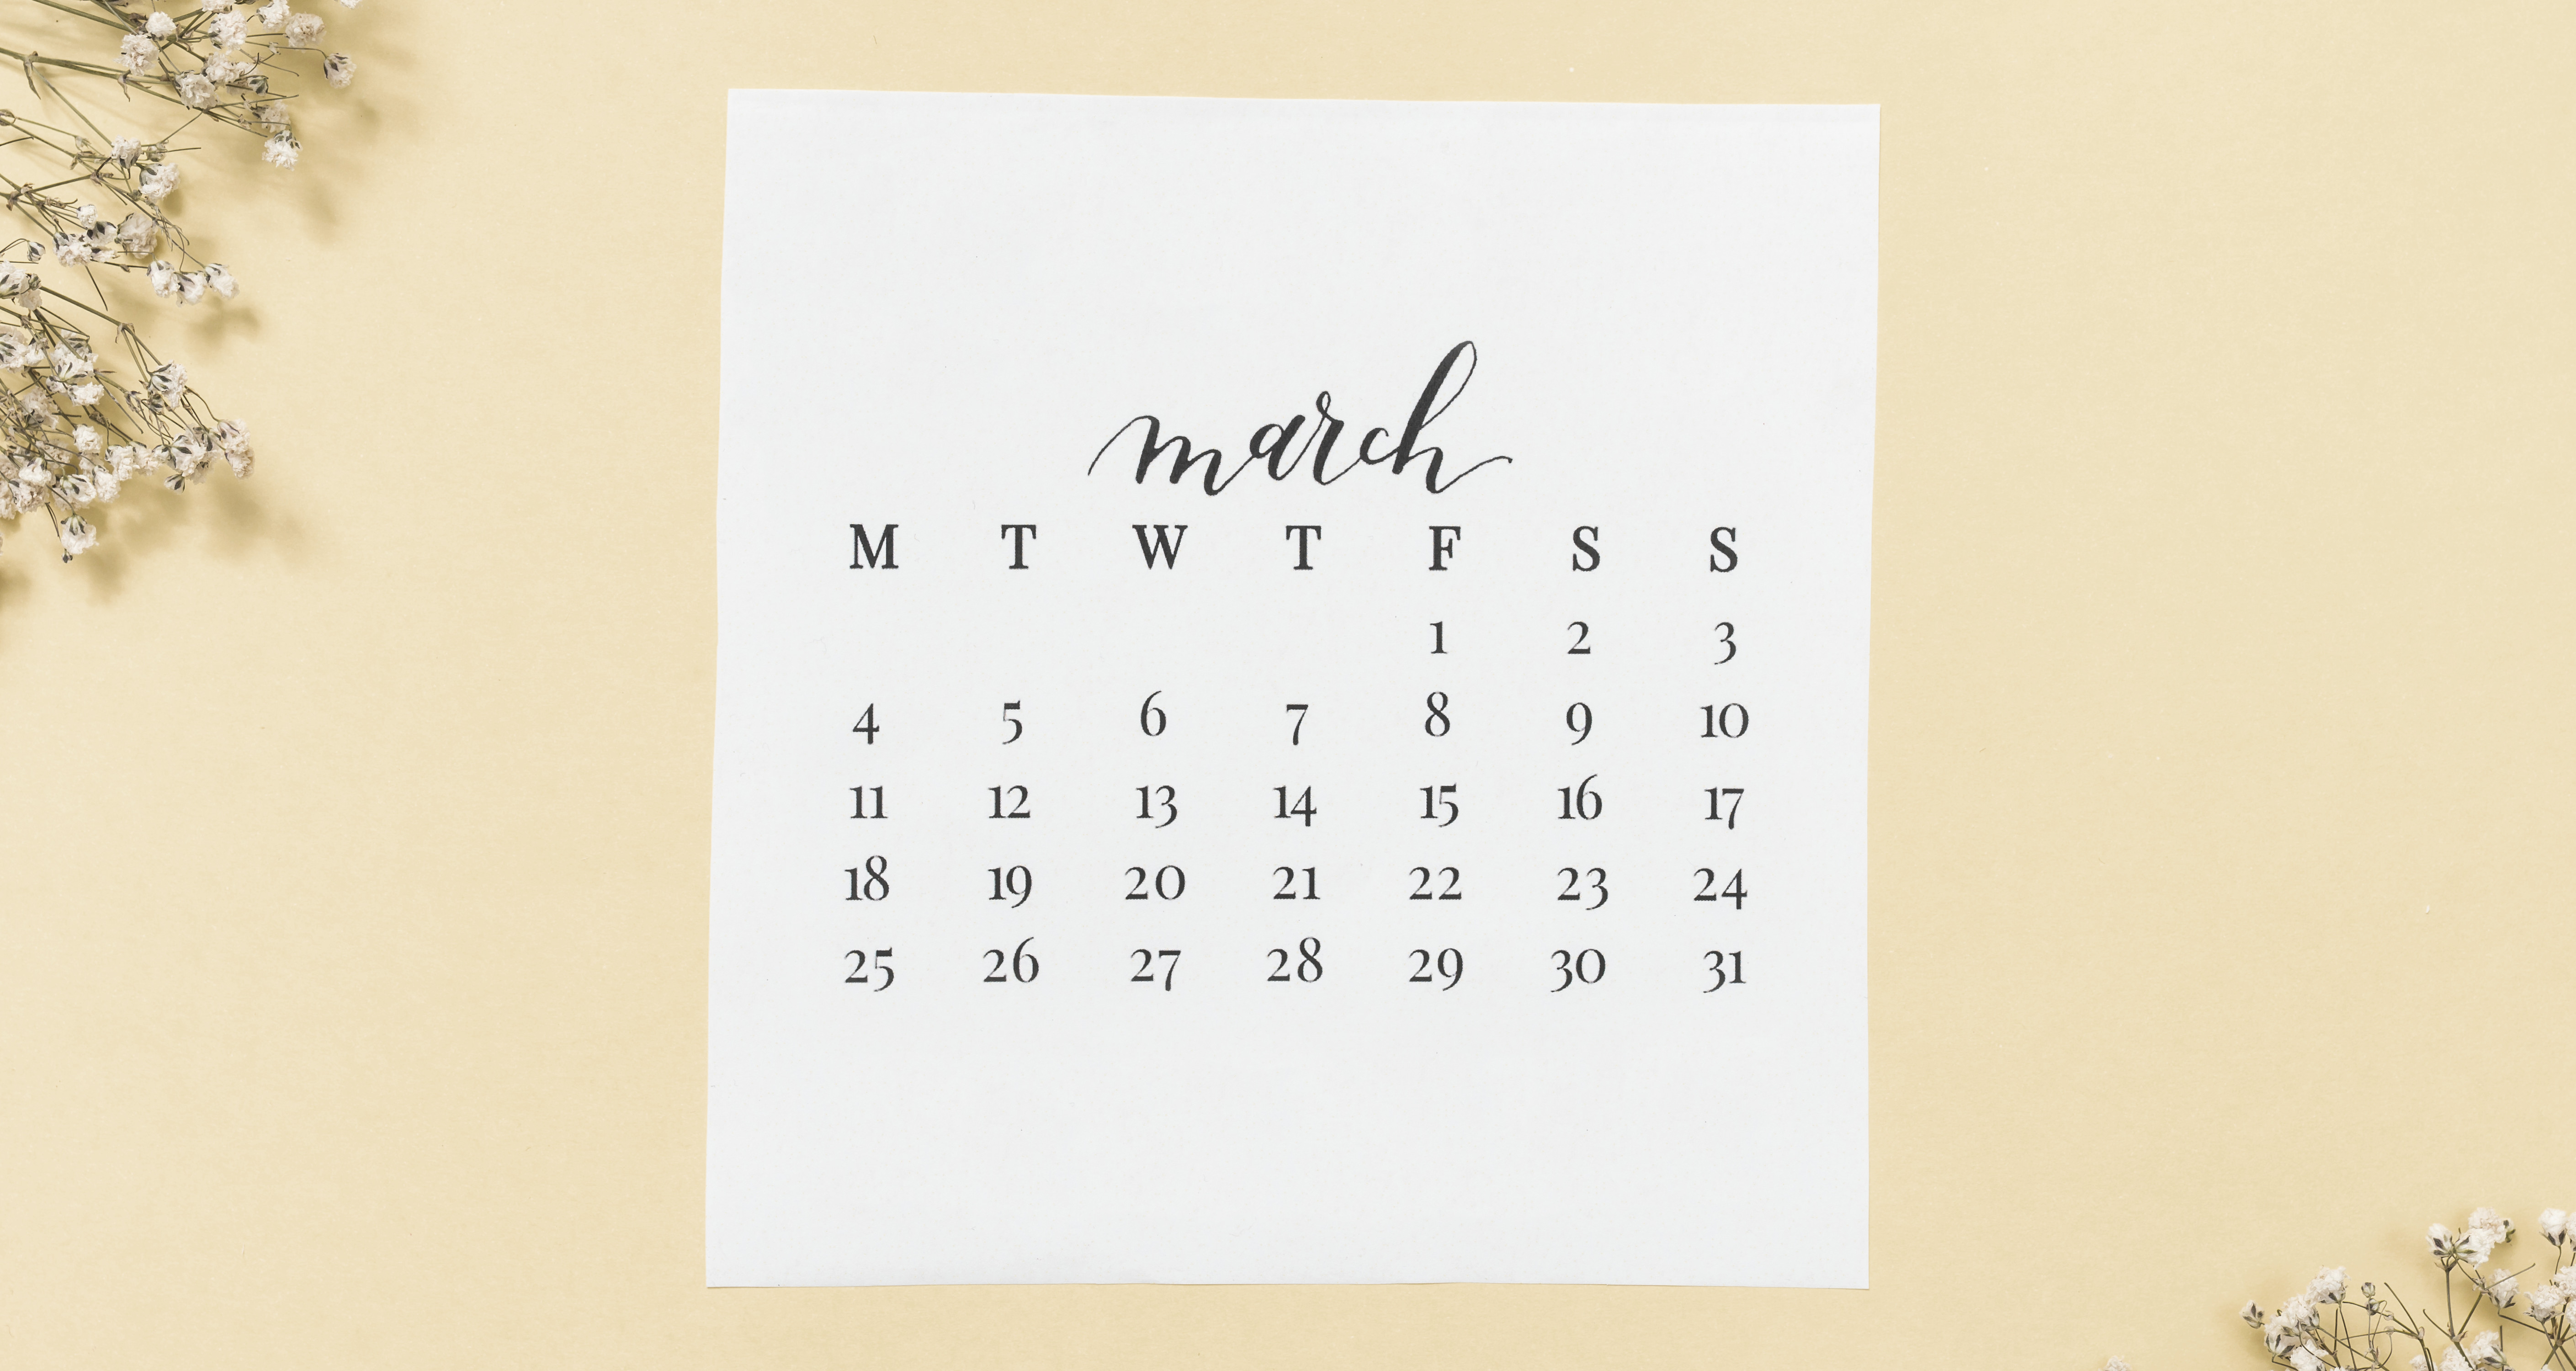 Включи календарь на март. Календарь март. Календарь март картинка. Настенный календарь март. Красивый фон для календаря март.